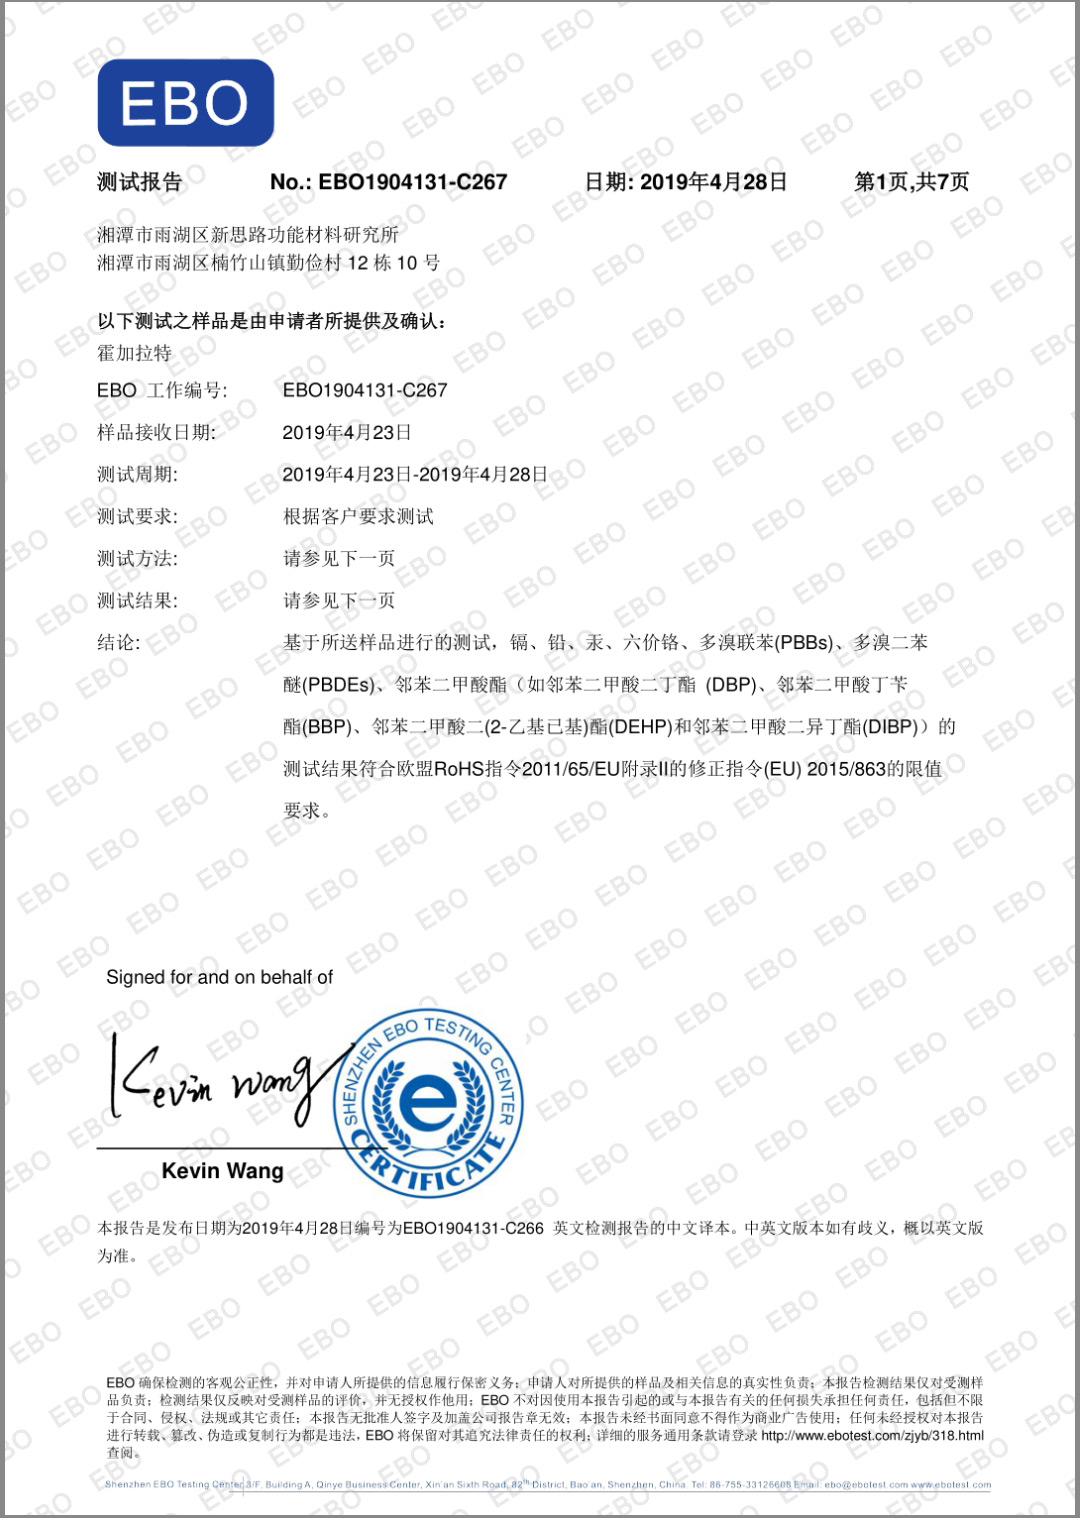 Xiangtan Yuhu District New Ideas Functional Materials Research Institute,Xiangtan chemical catalysis, Xiangtan high-purity superfine powder material,Xiangtan toxic and harmful gas purification